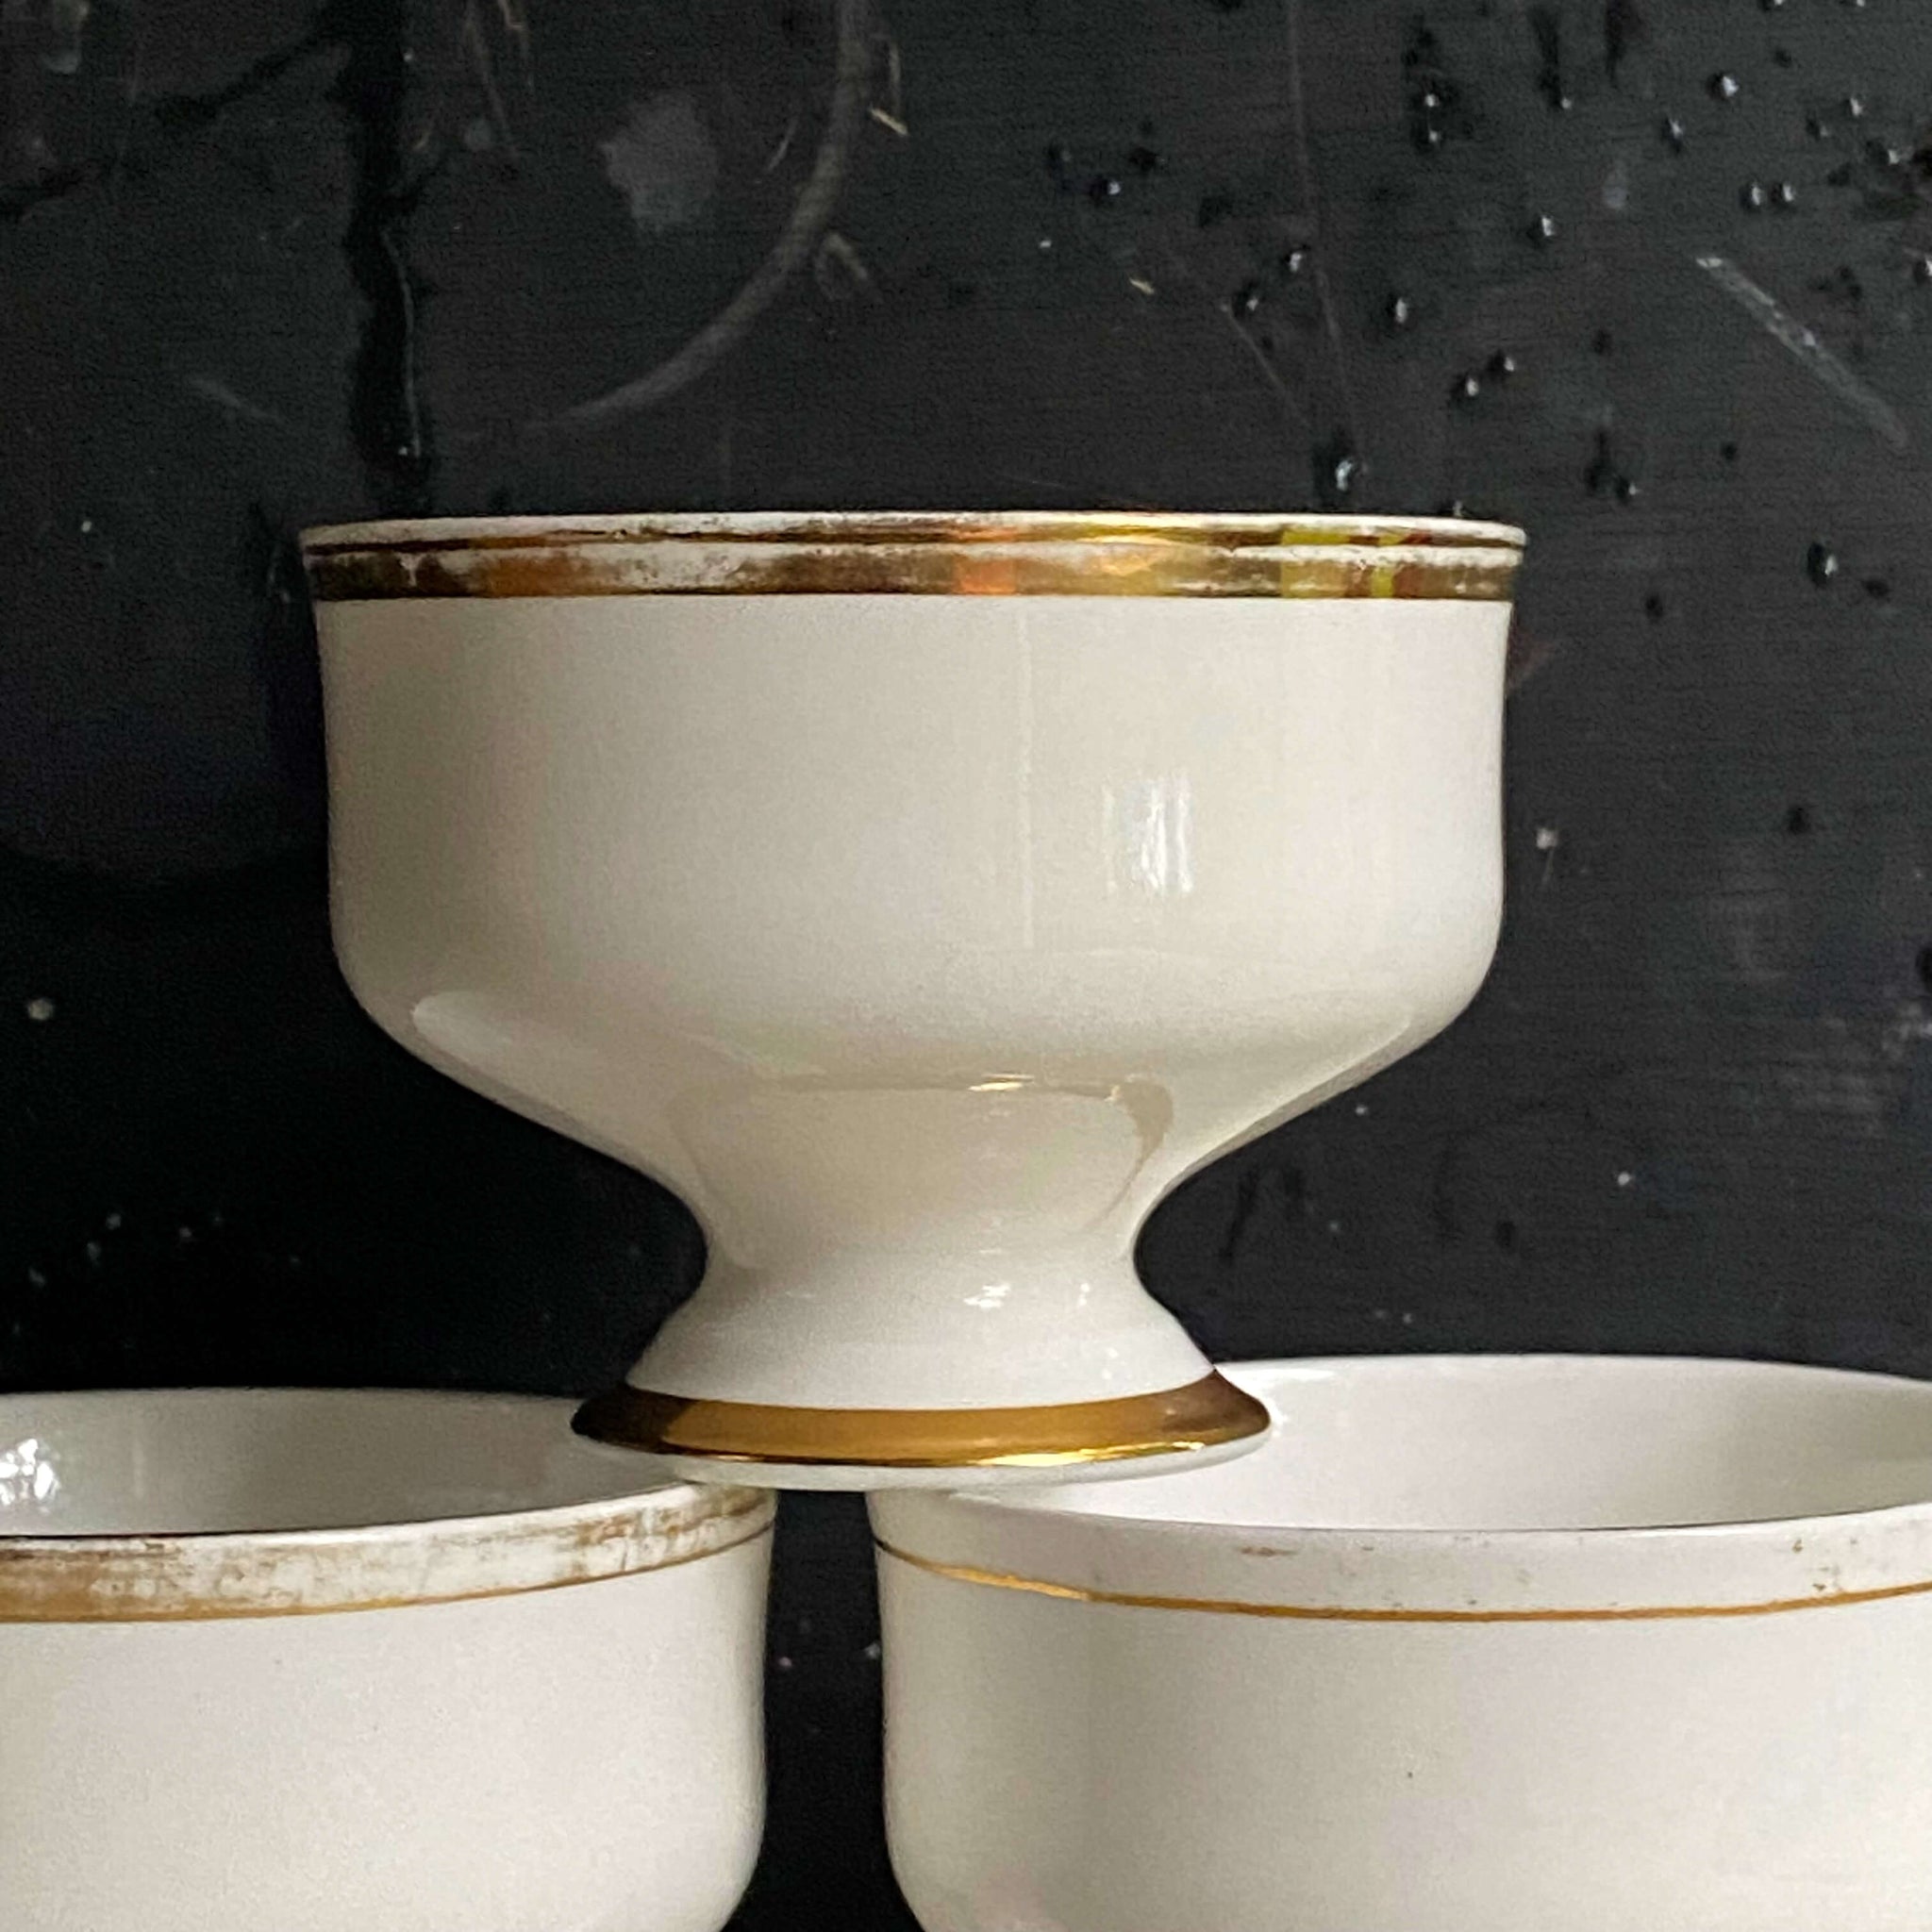 Vintage Royal Victoria Pedestal Dessert Cups with Gold Stripes - Set of Three